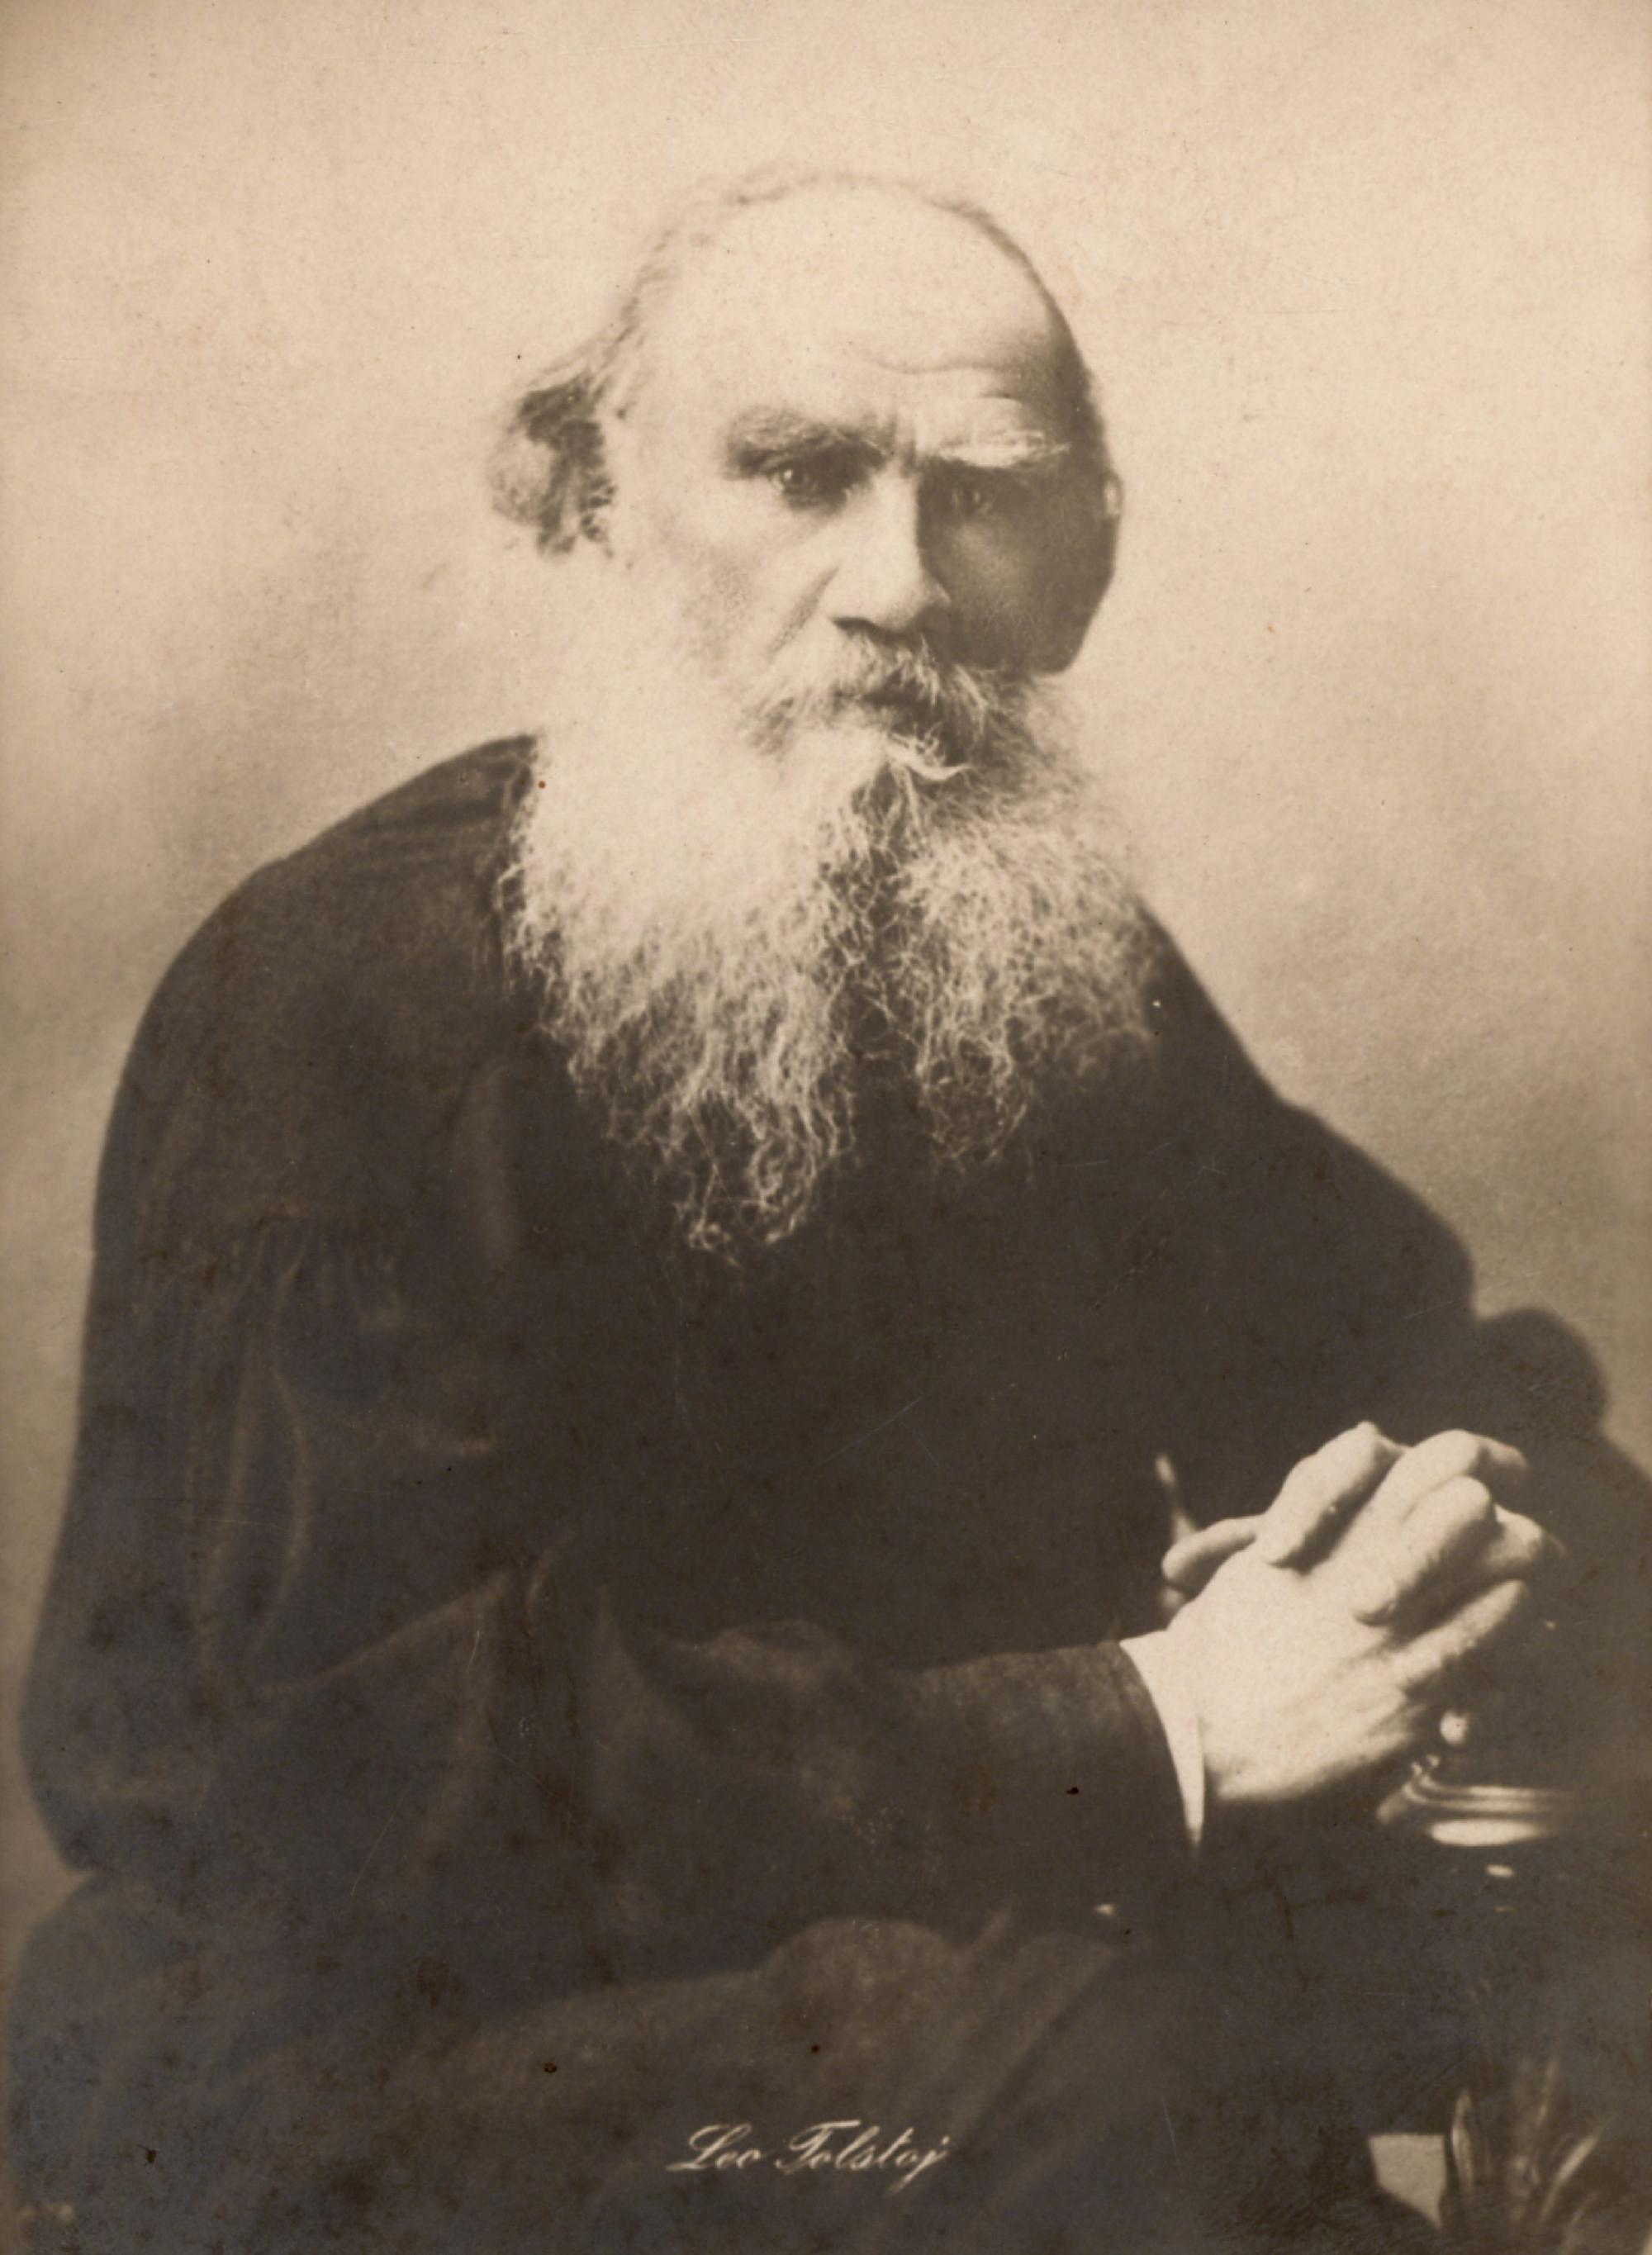 Russian writer Leo Tolstoy